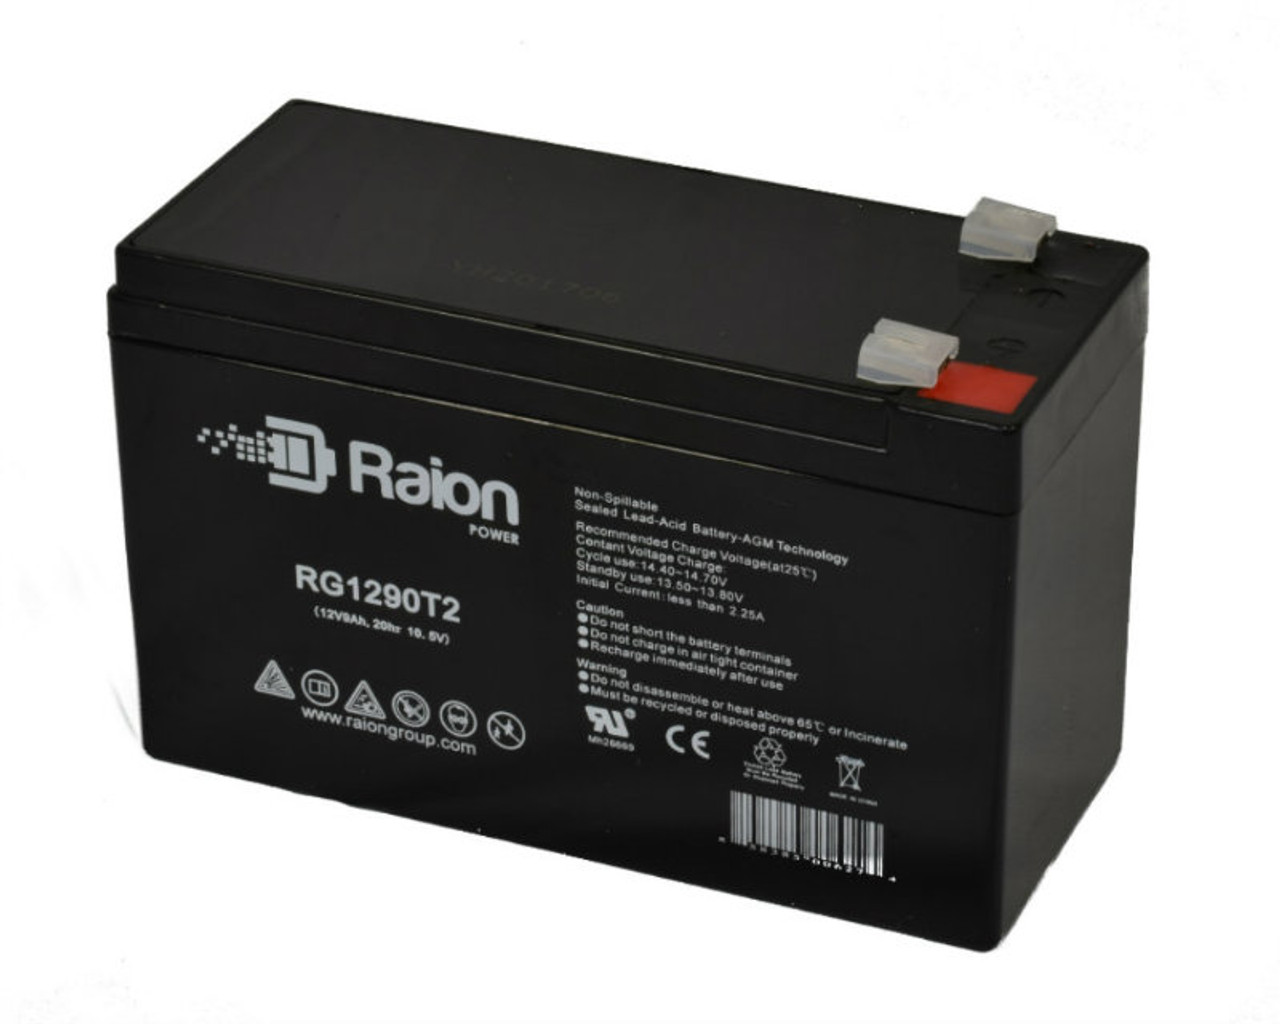 Raion Power Replacement 12V 9Ah Emergency Light Battery for Trio Lightning TL930035 - 1 Pack